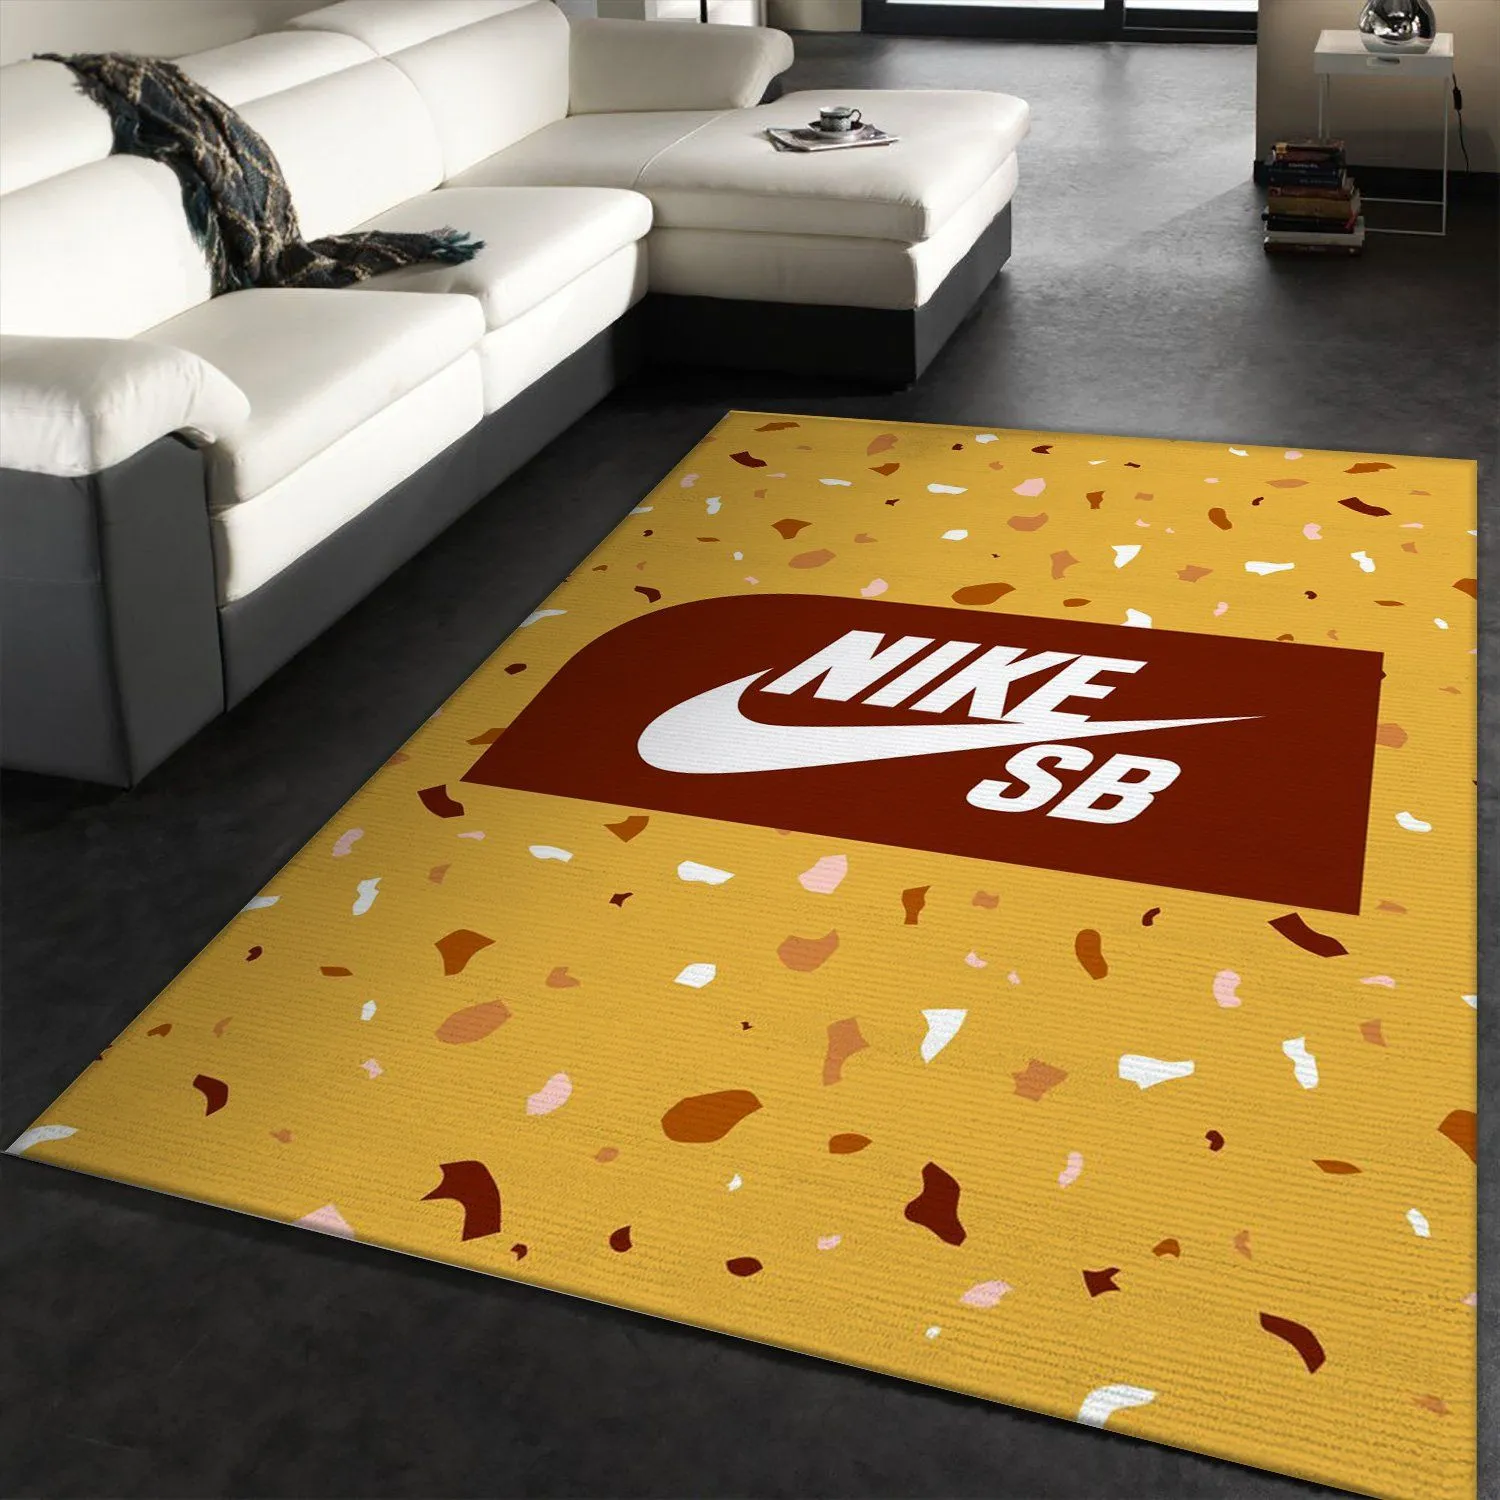 Nike Sb Rectangle Rug Area Carpet Door Mat Fashion Brand Luxury Home Decor